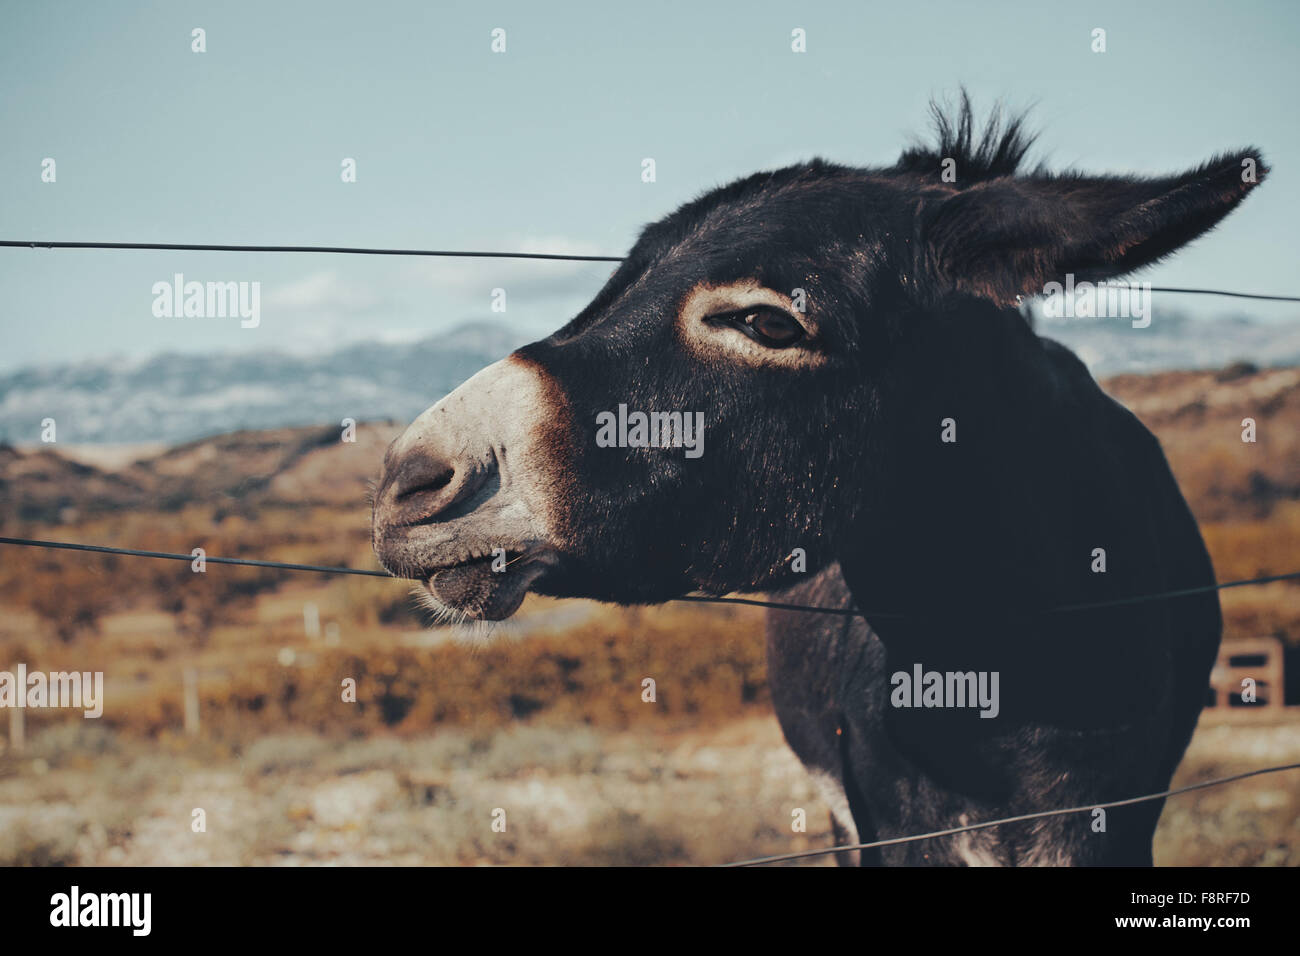 Donkey standing in a field, Novalja, Croatia Stock Photo